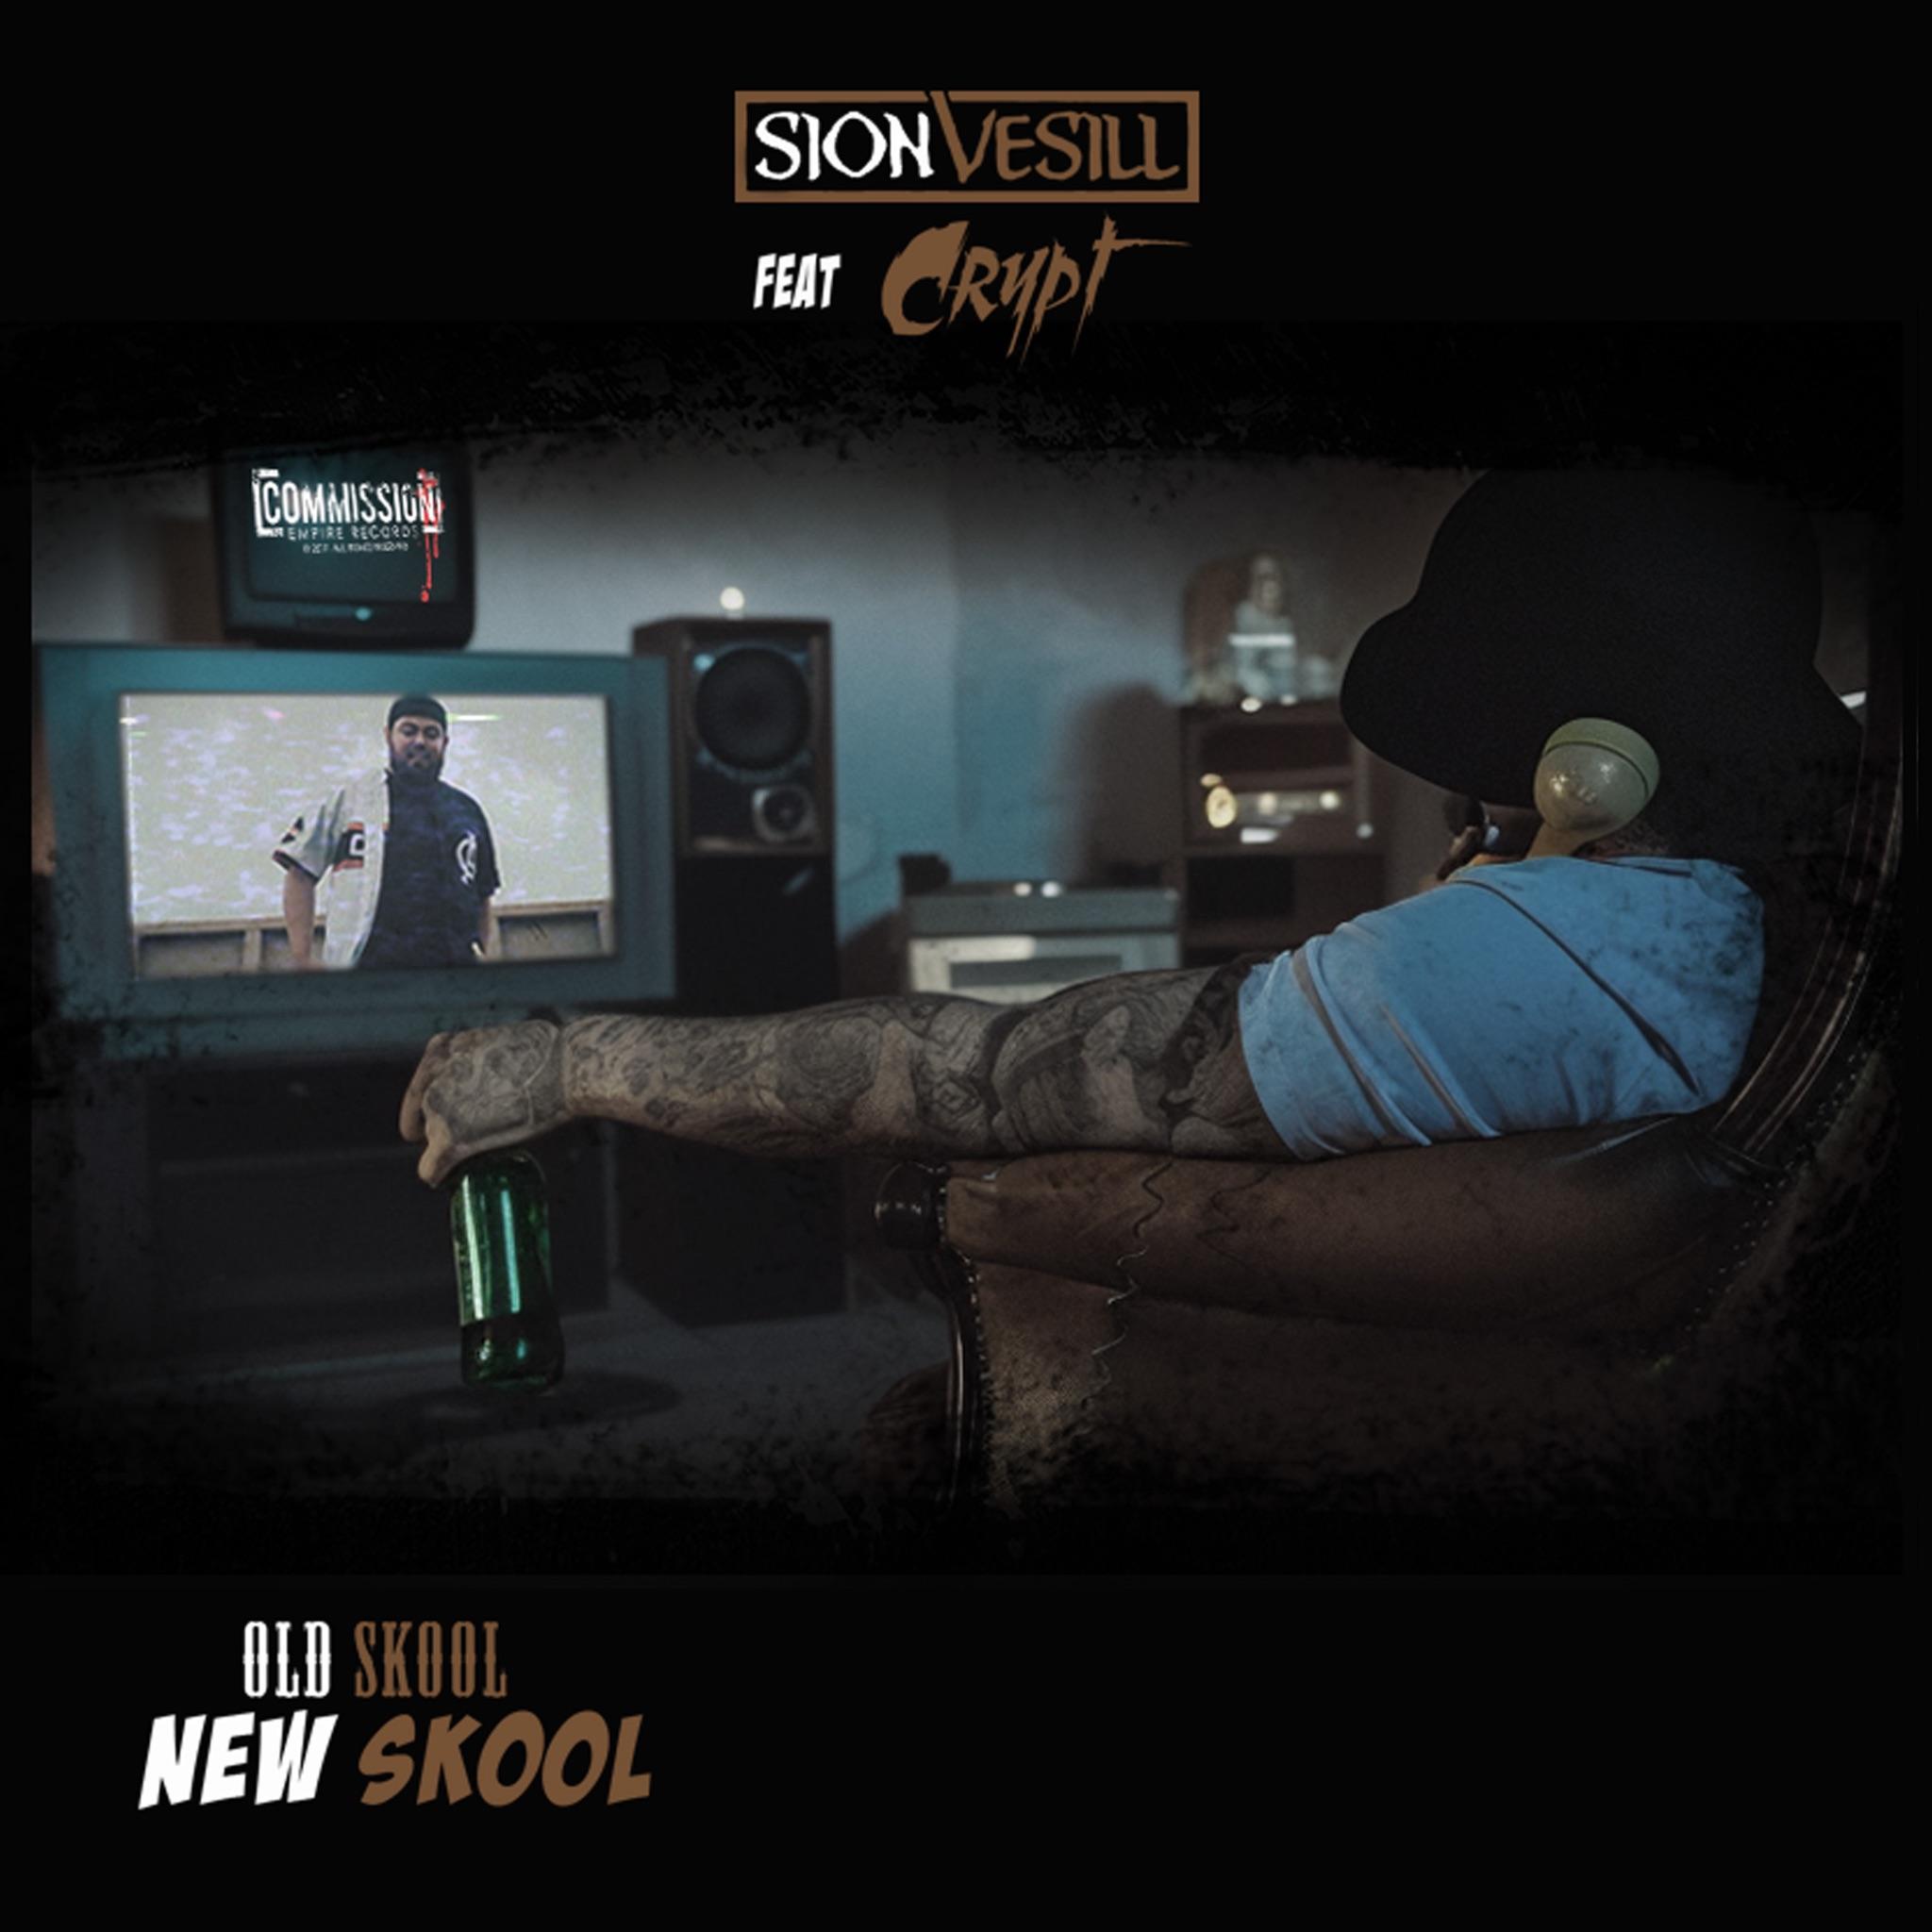 Sion Vesill feat. Crypt – “Old Skool New Skool”